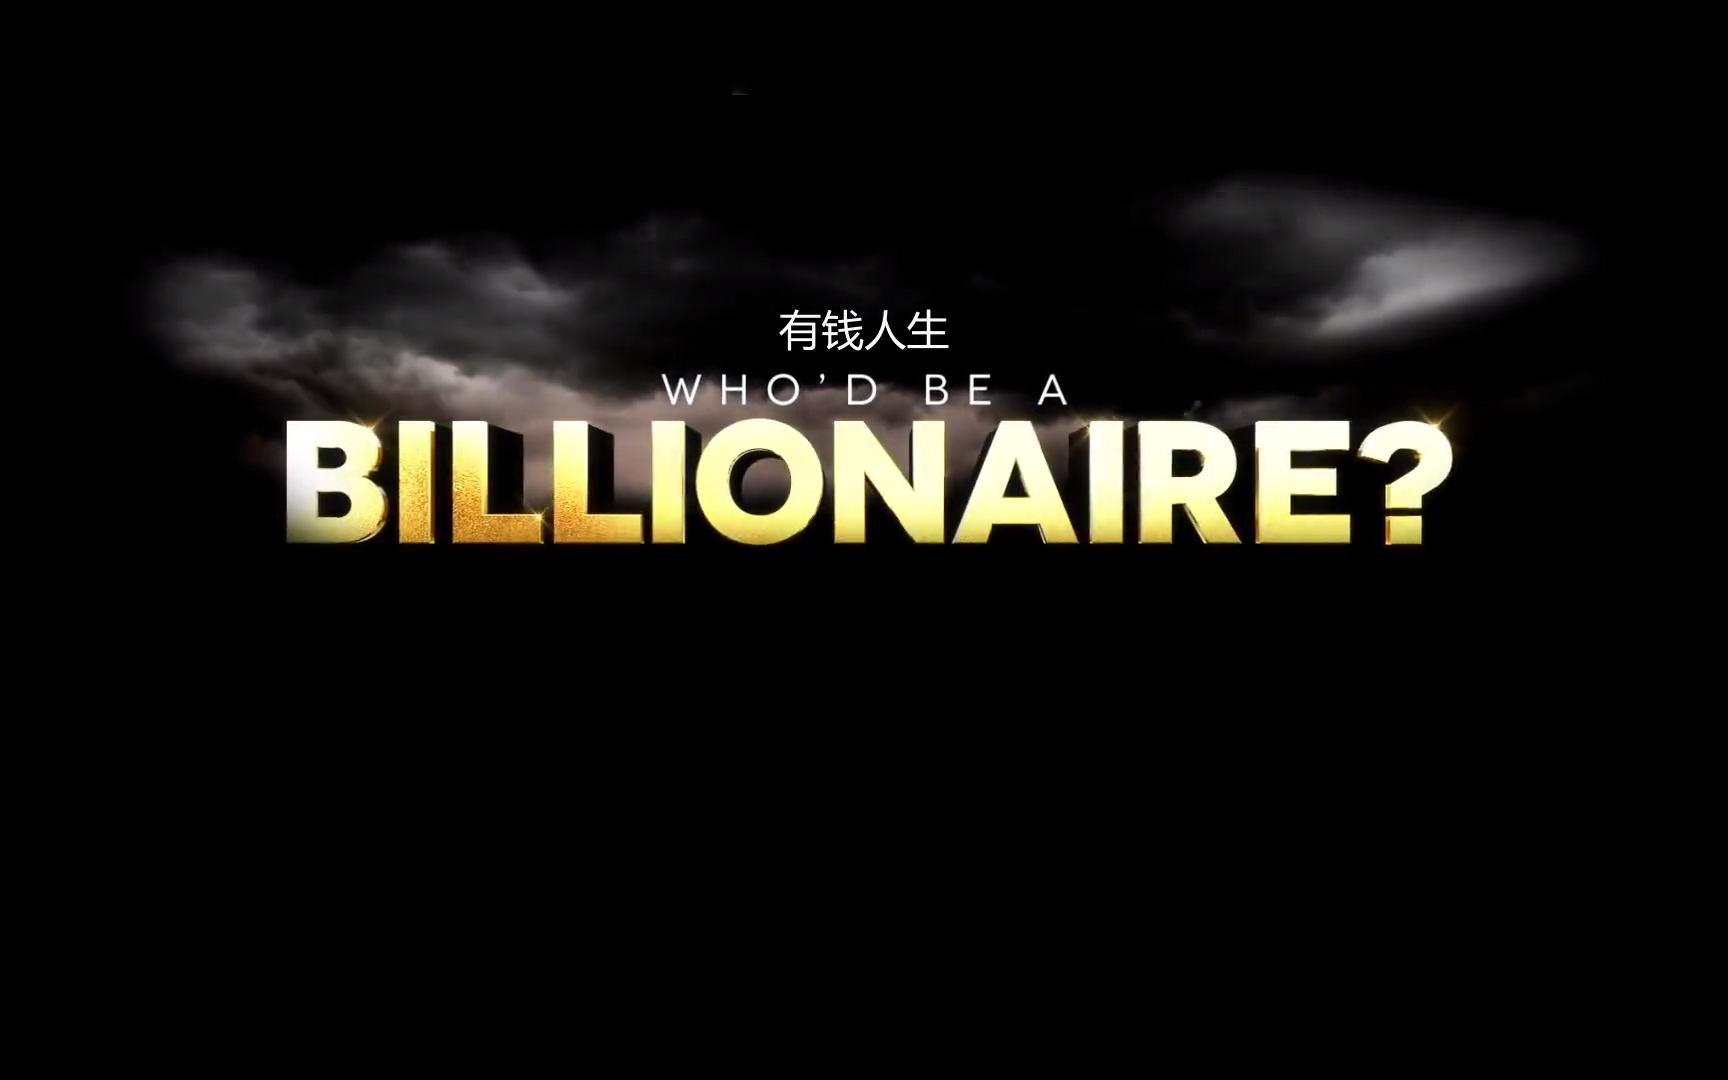 【纪录片】有钱人生-Who'd be a billionaire